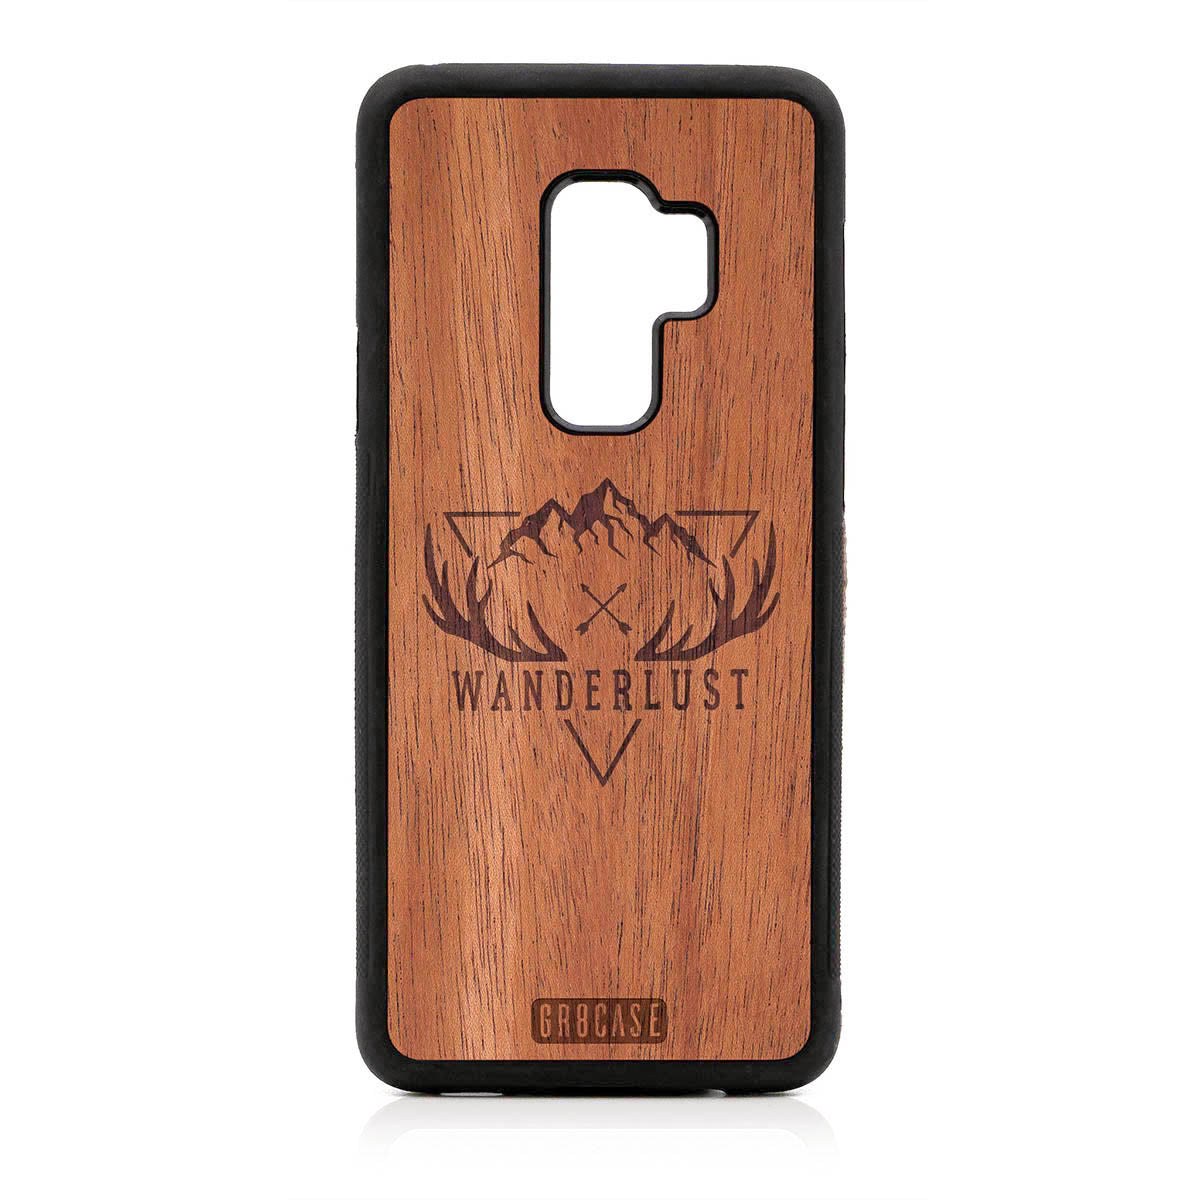 Wanderlust Design Wood Case For Samsung Galaxy S9 Plus